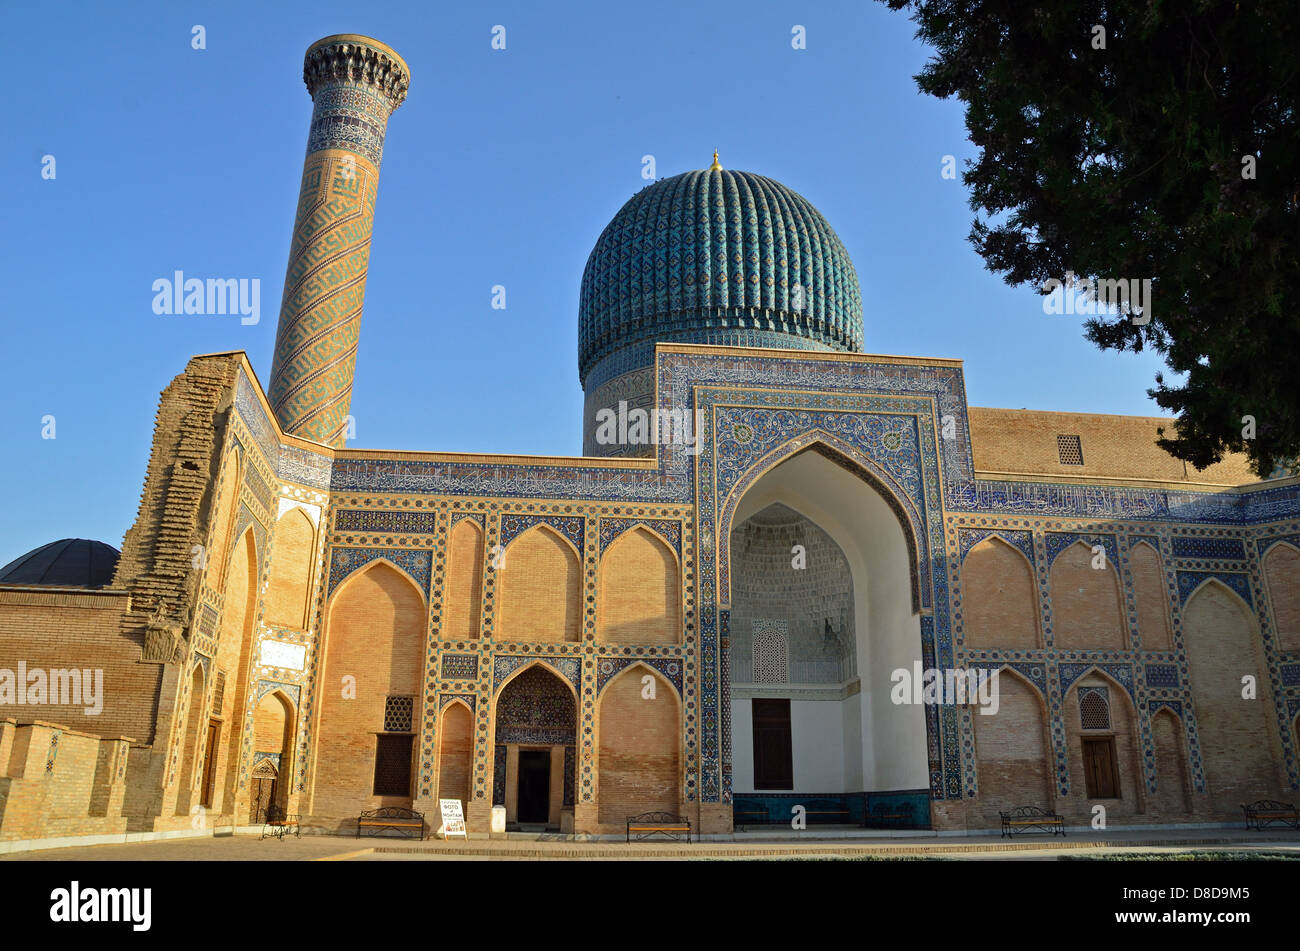 El Gur-e Amir mausoleo en Samarcanda Foto de stock